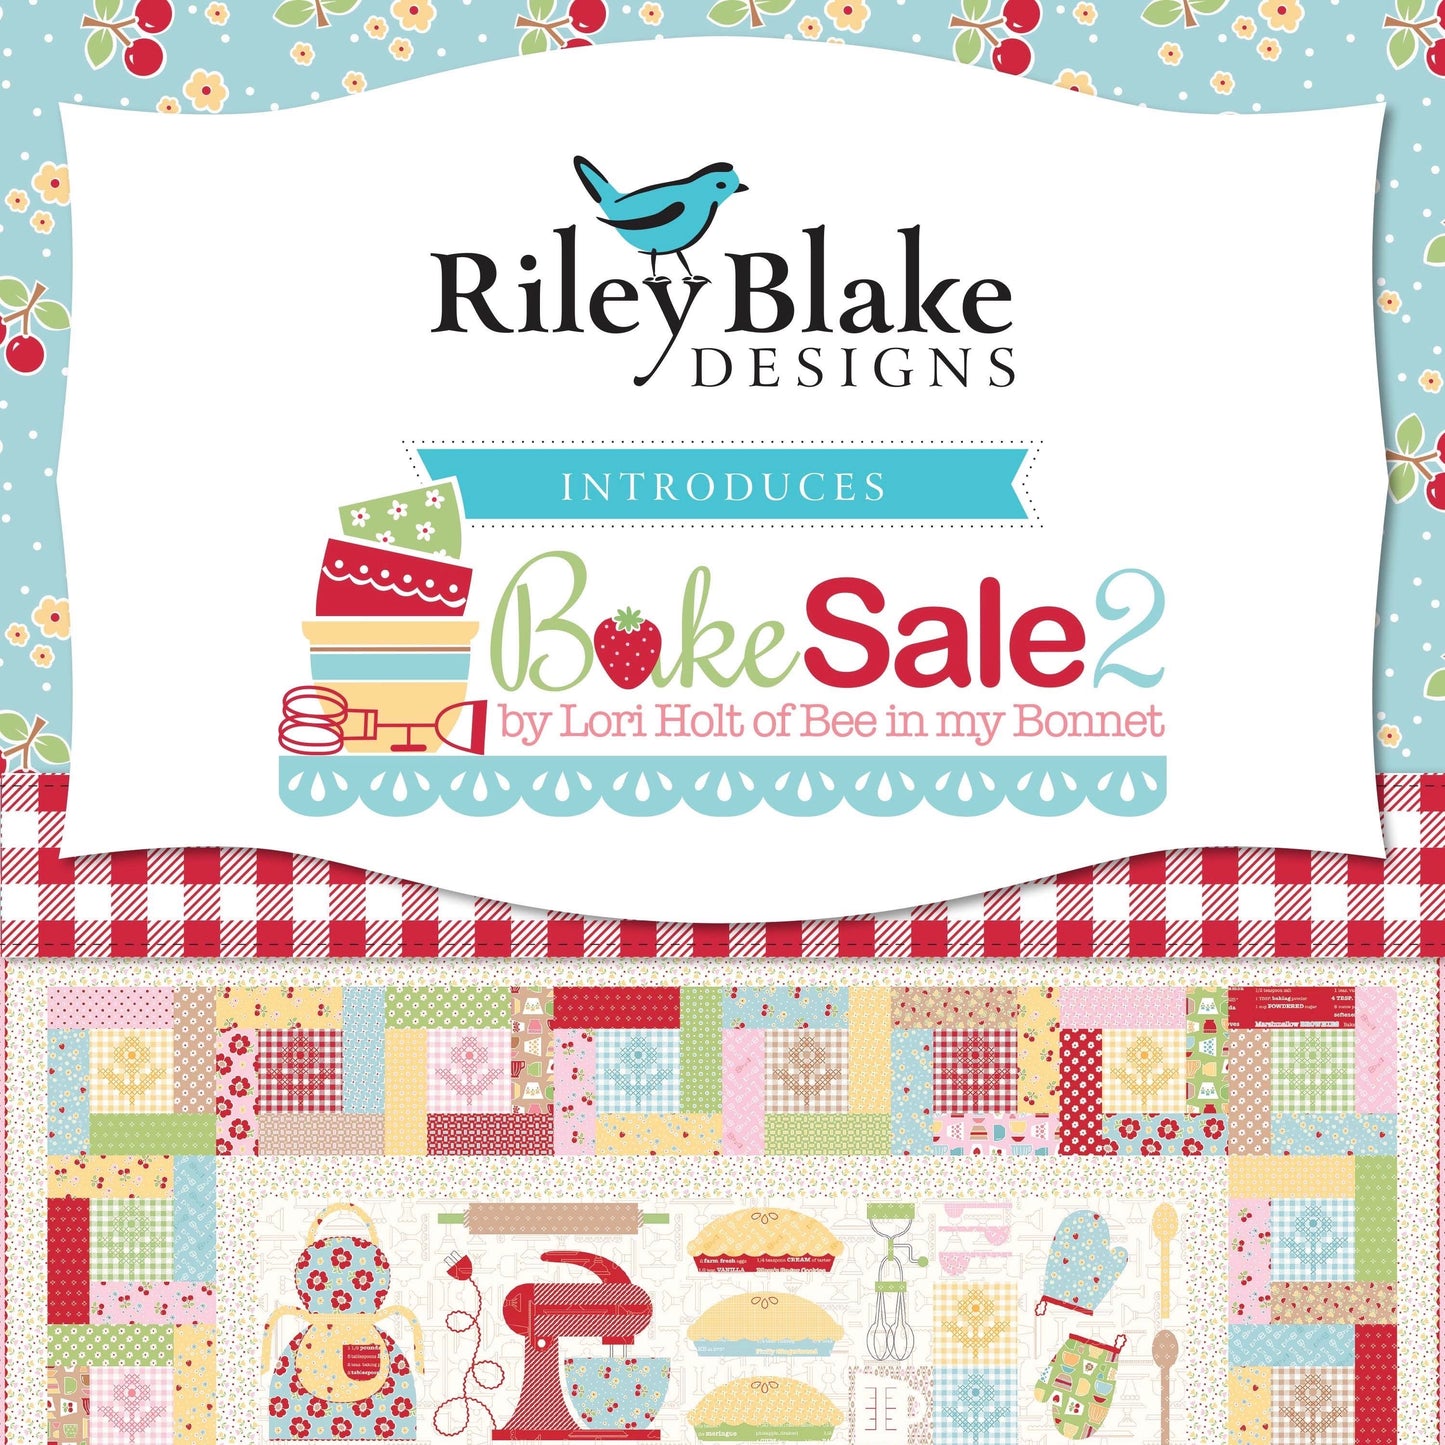 Bake Sale 2 - Nutmeg Tulips - Lori Holt - Bee In My Bonnet - Riley Blake - C6984 NUTMEG